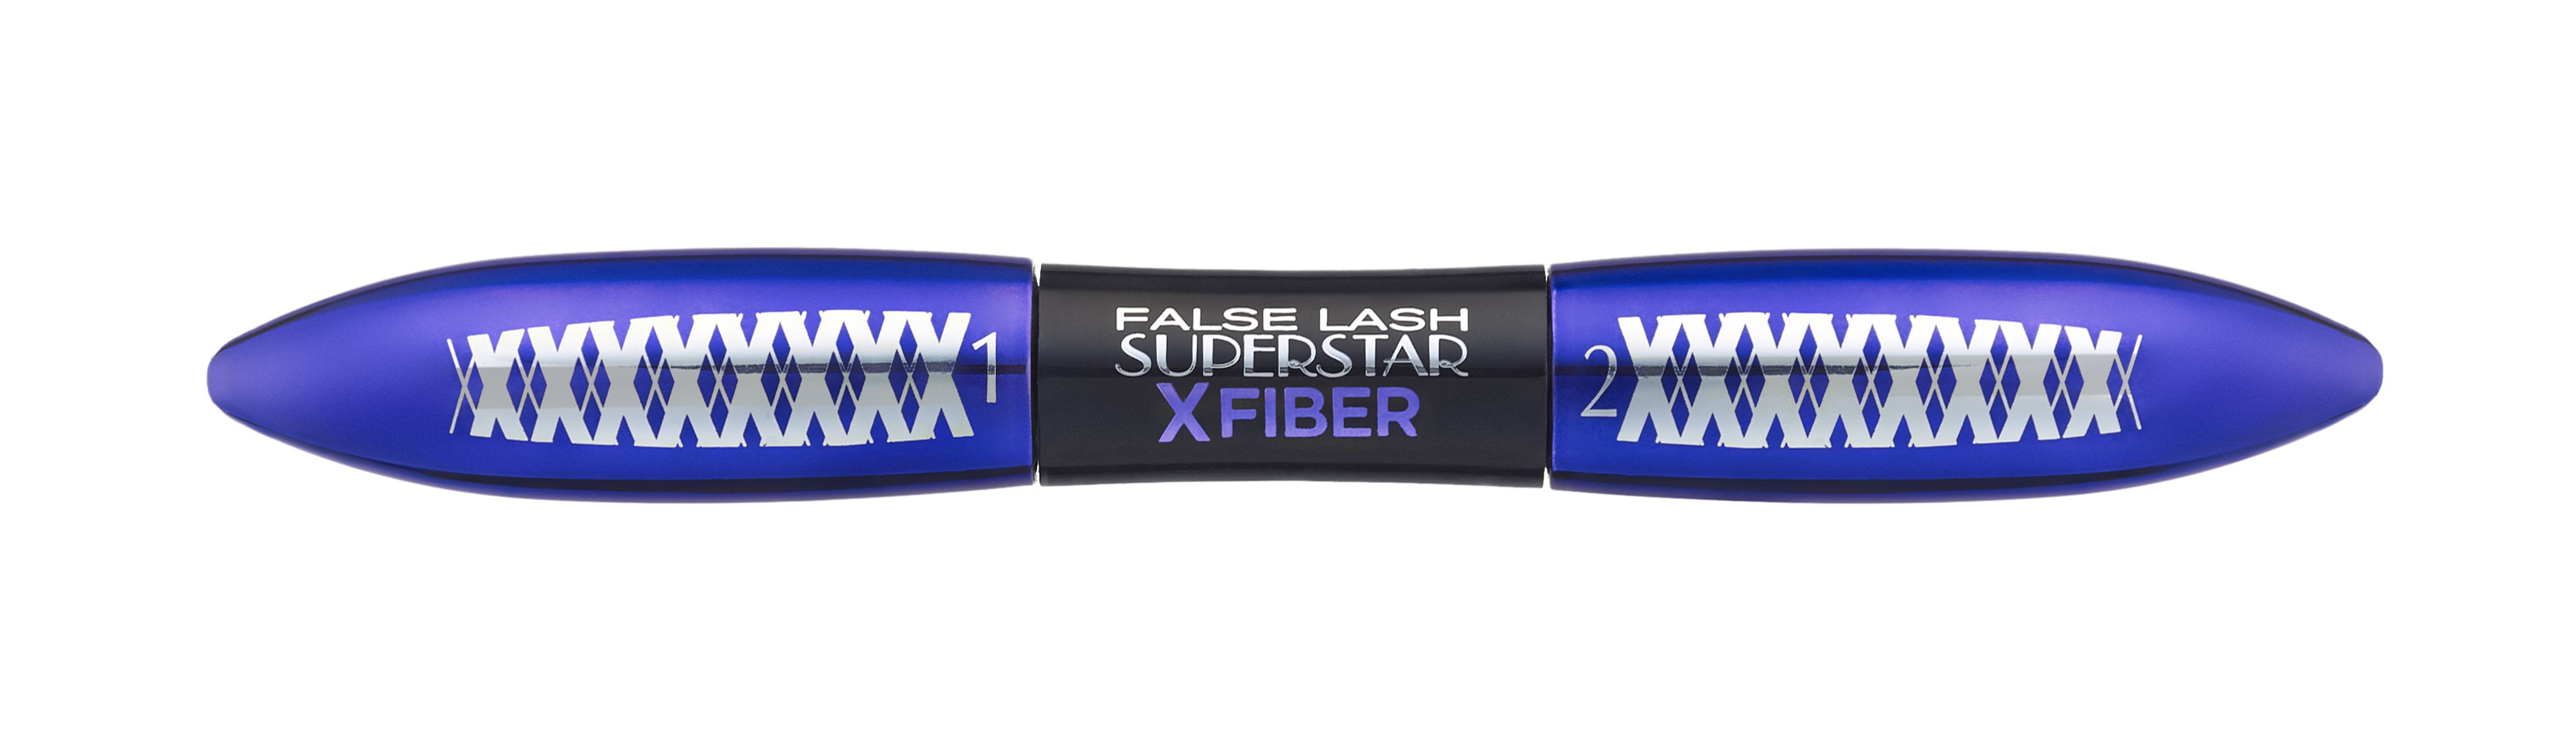 SUPERSTAR-XFIBER